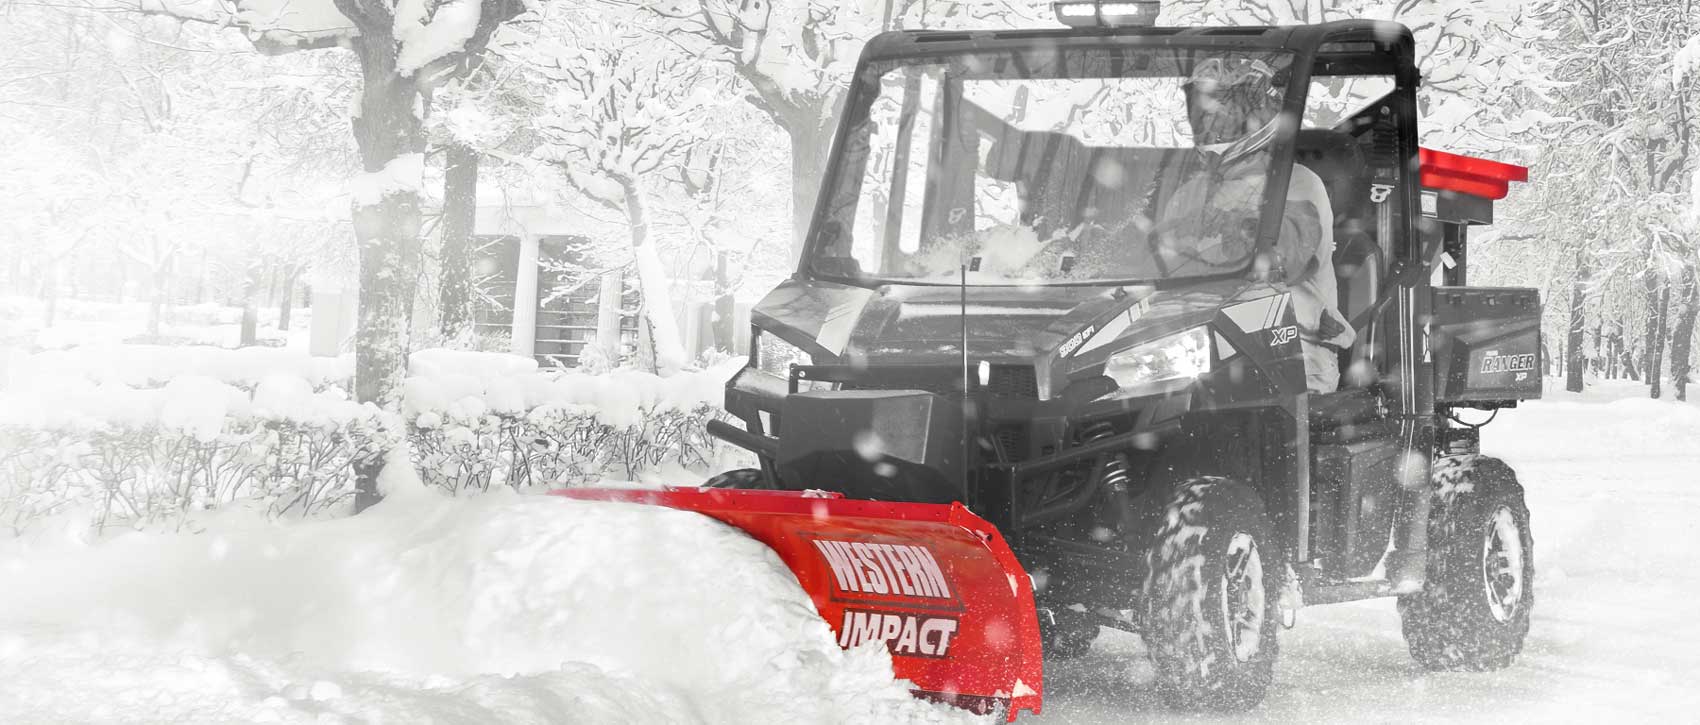 Western Heavy-Duty UTV straight blade snow plow